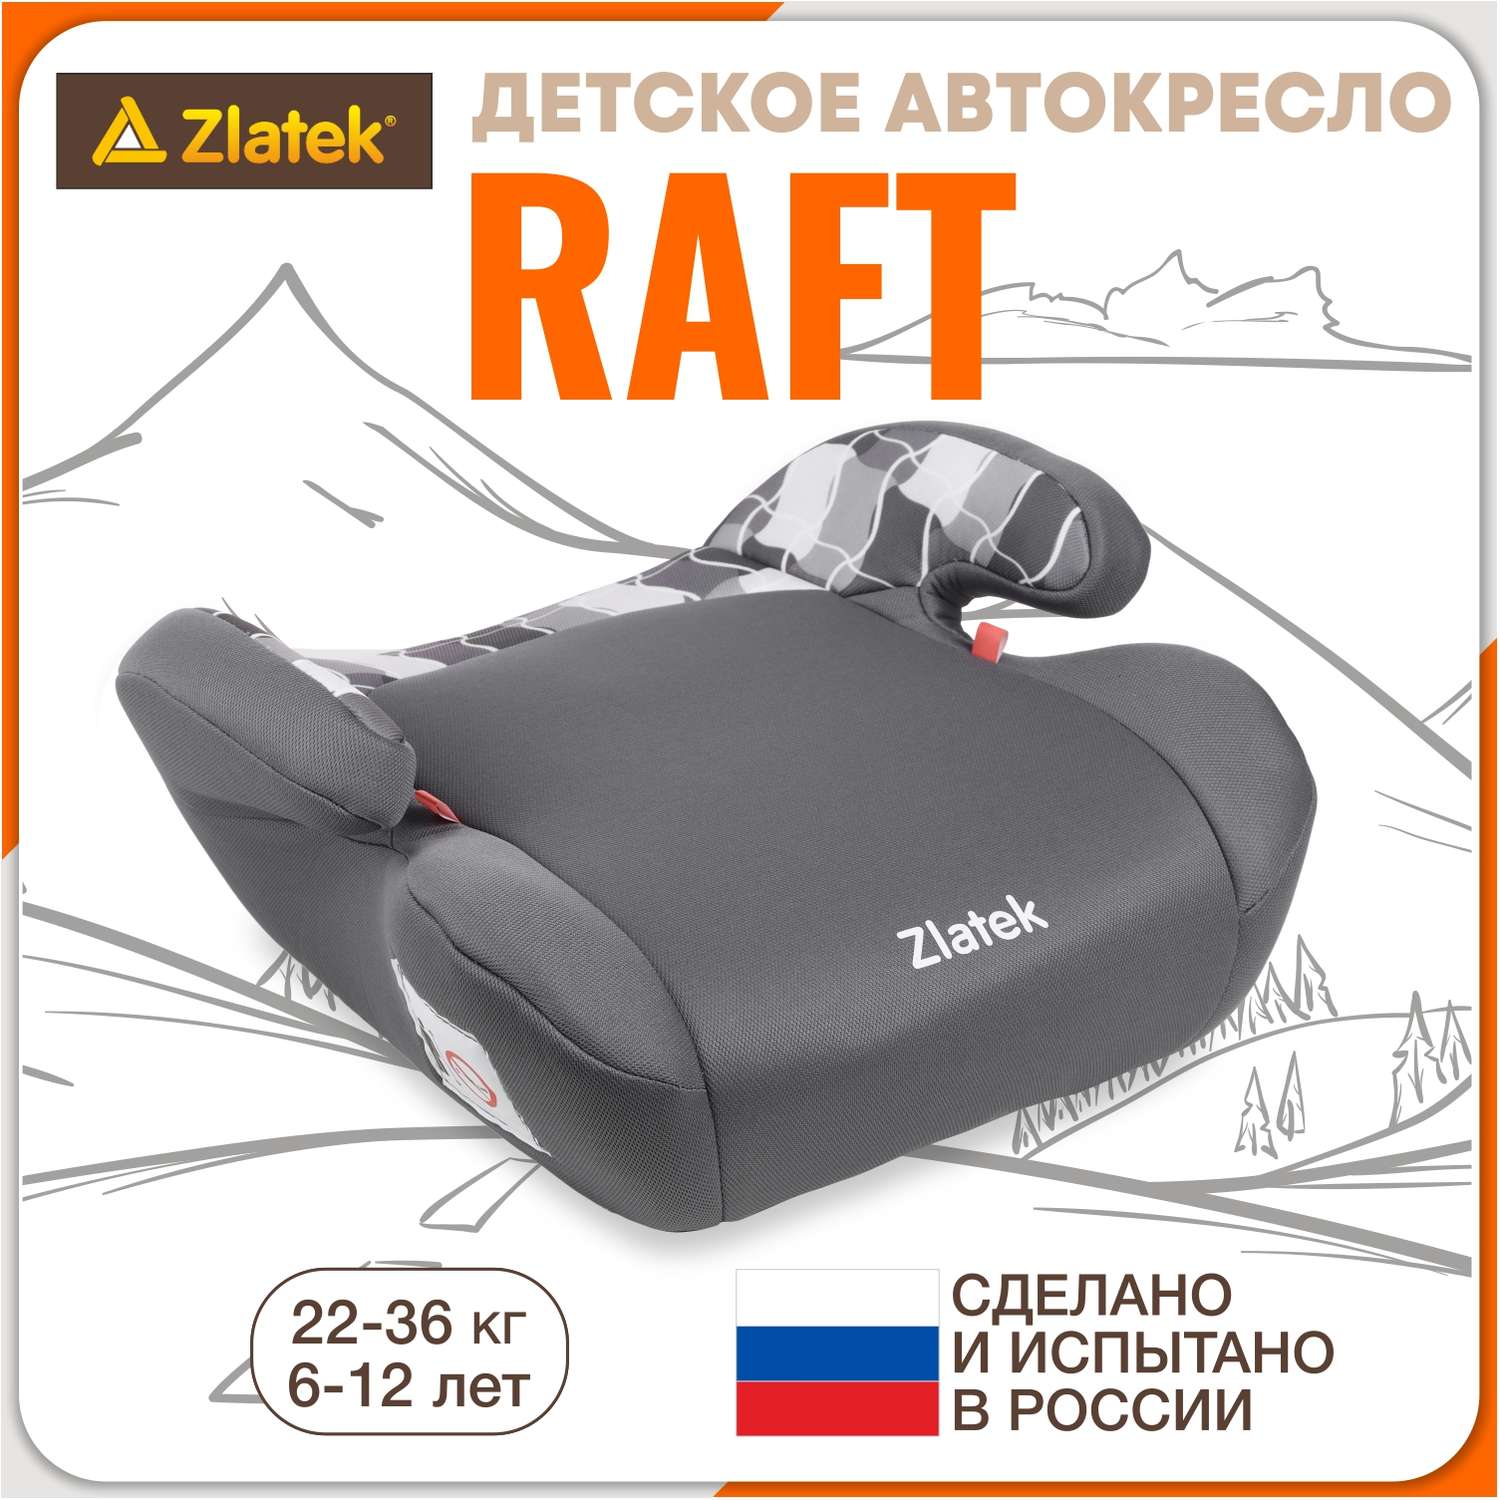 Бустер удерживающее устройство ZLATEK Рафт гр.III фьюжн - фото 1